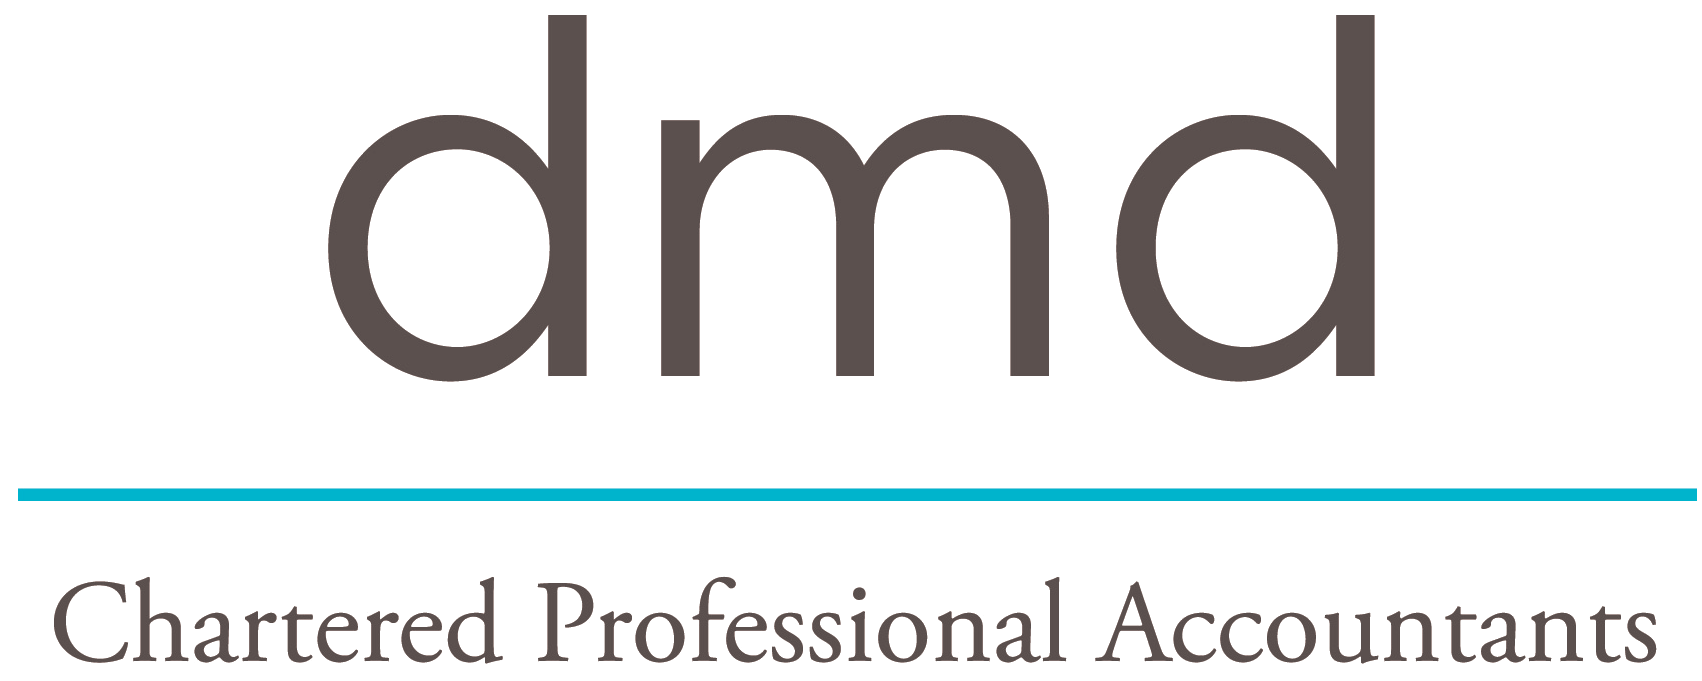 dmd Chartered Professional Accountants logo